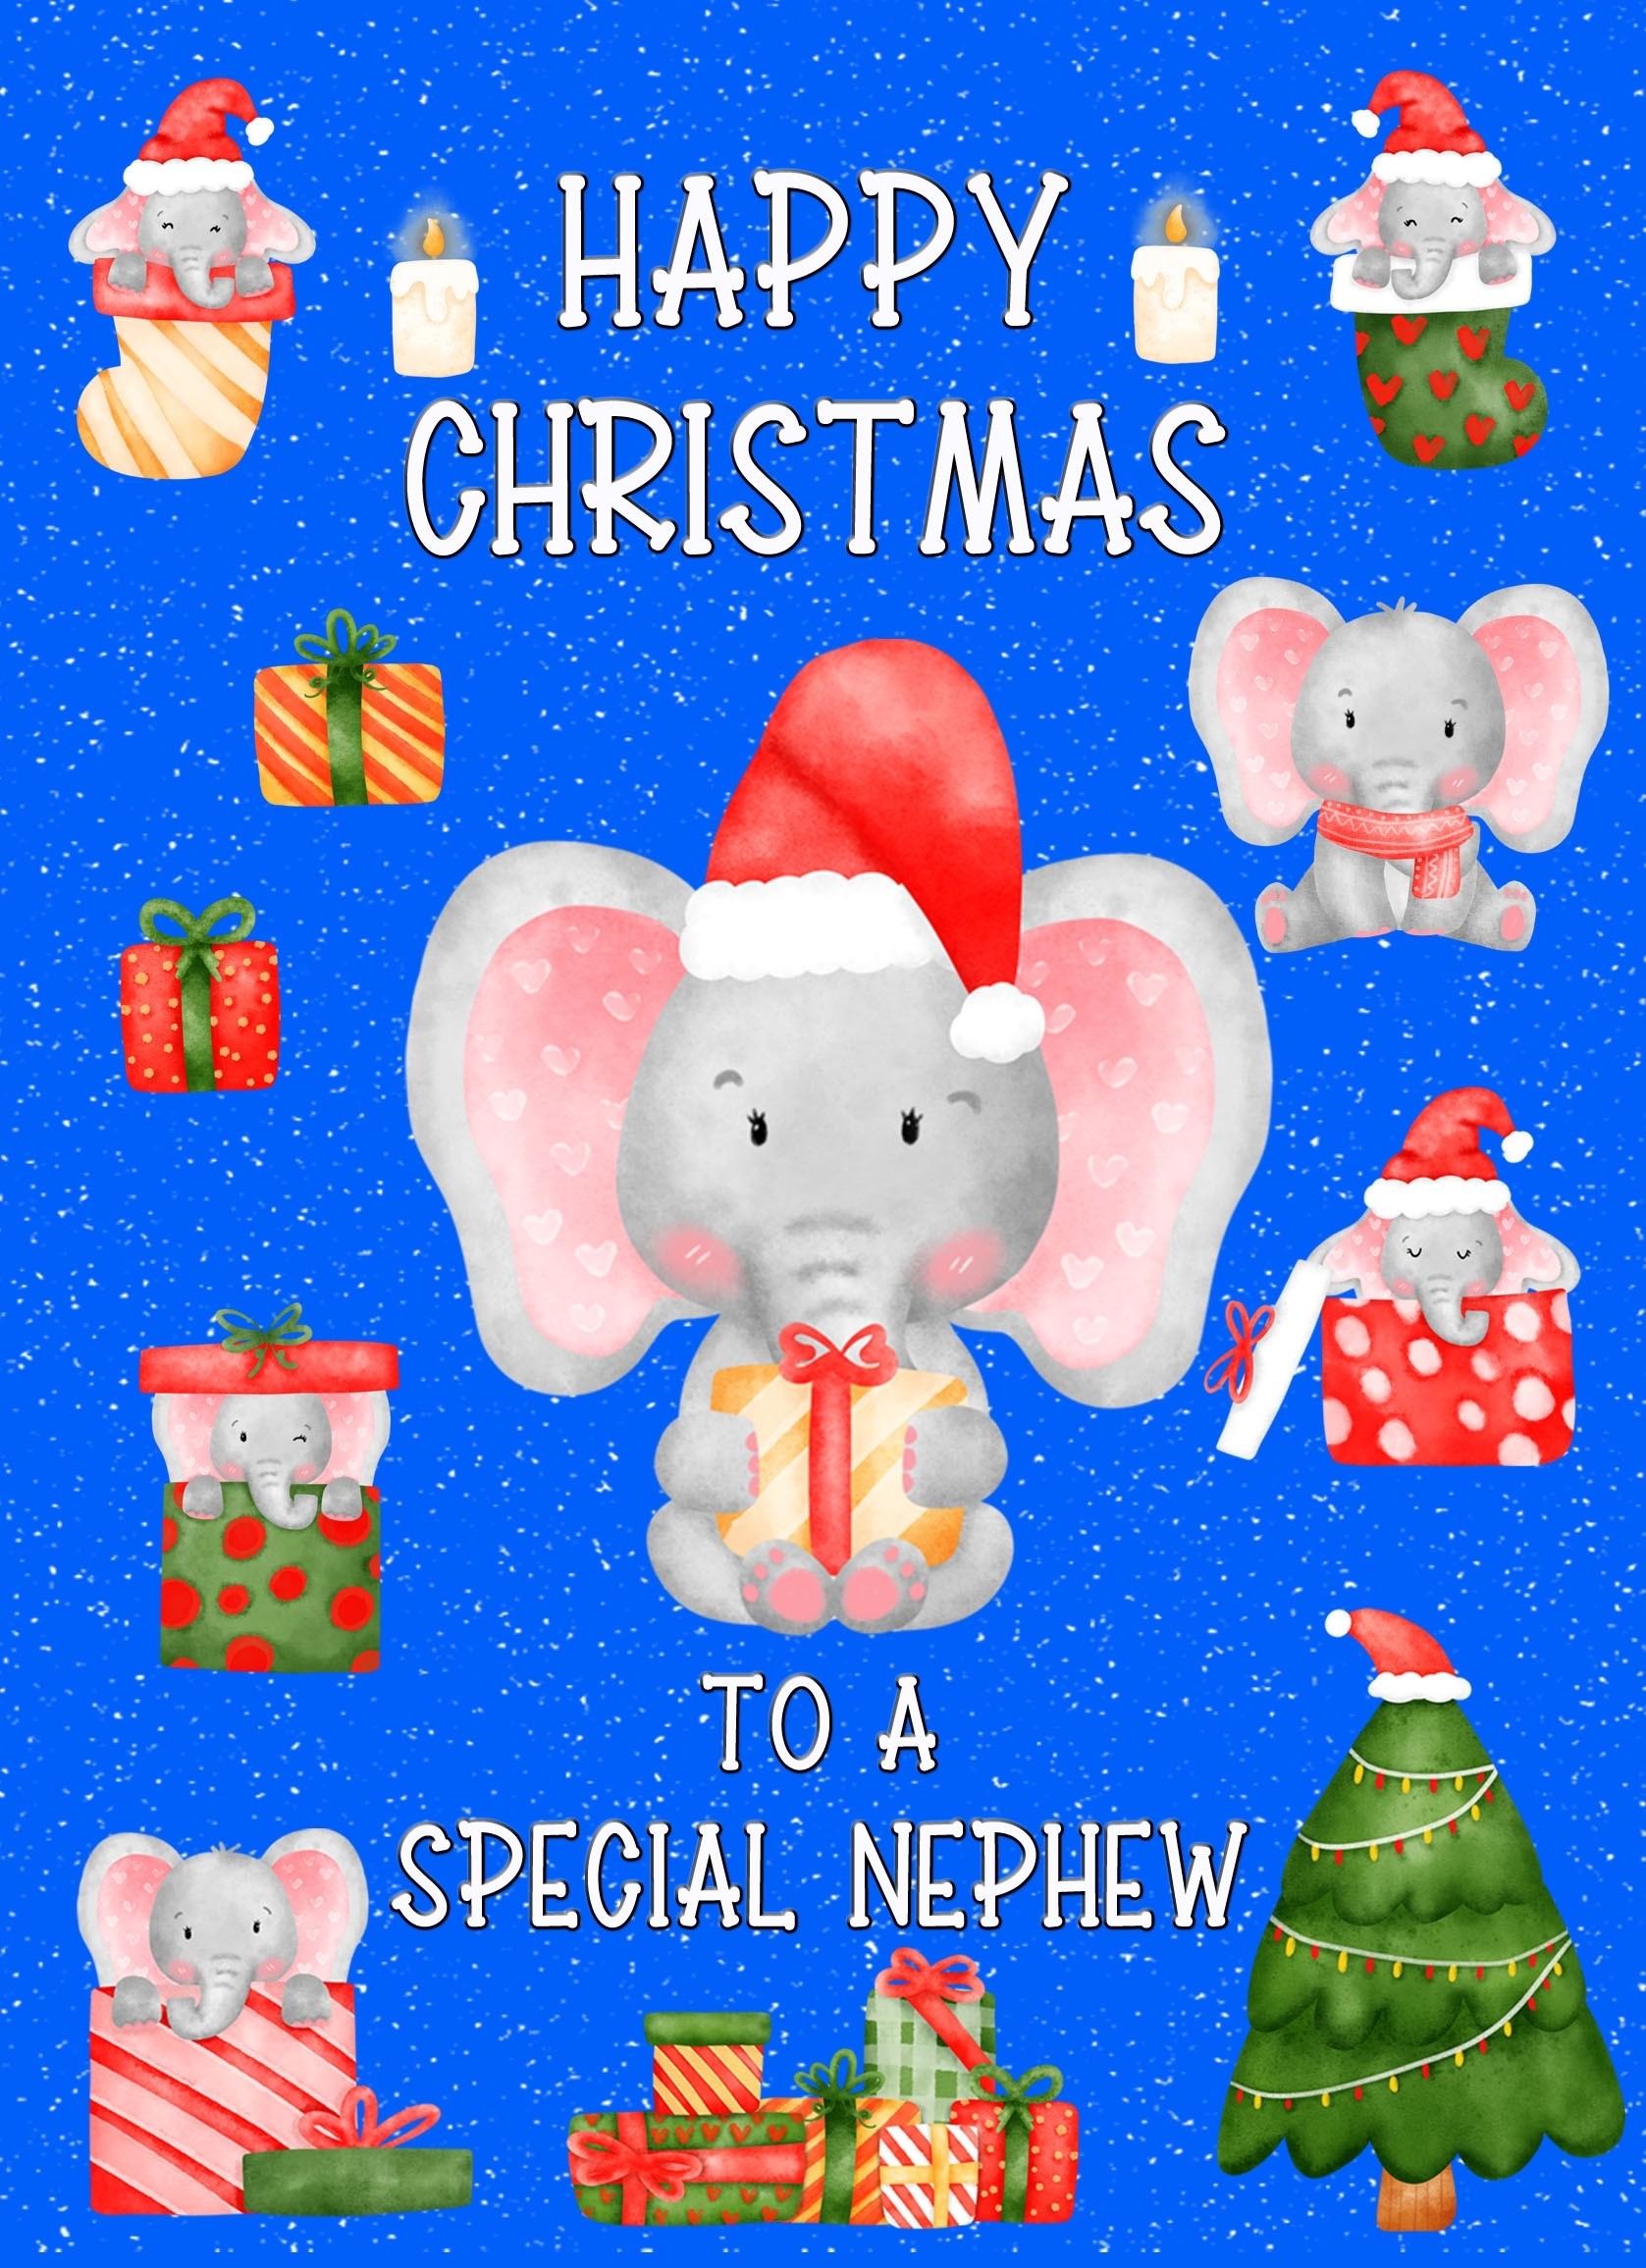 Christmas Card For Special Nephew (Blue)